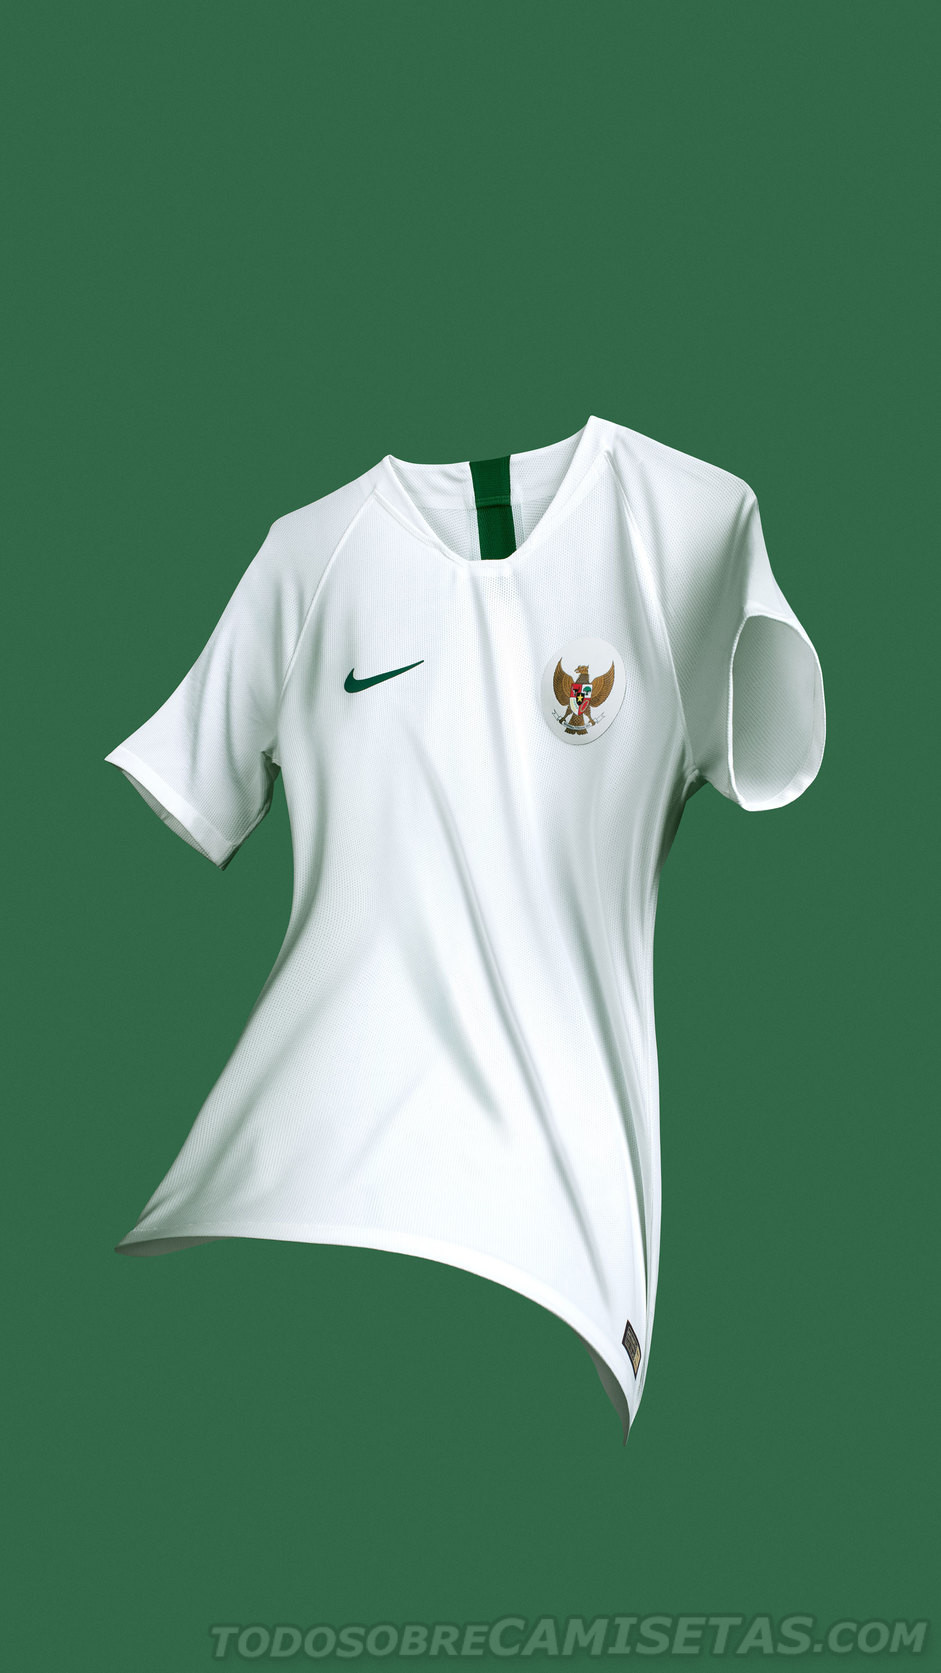 Indonesia Nike Kits 2018